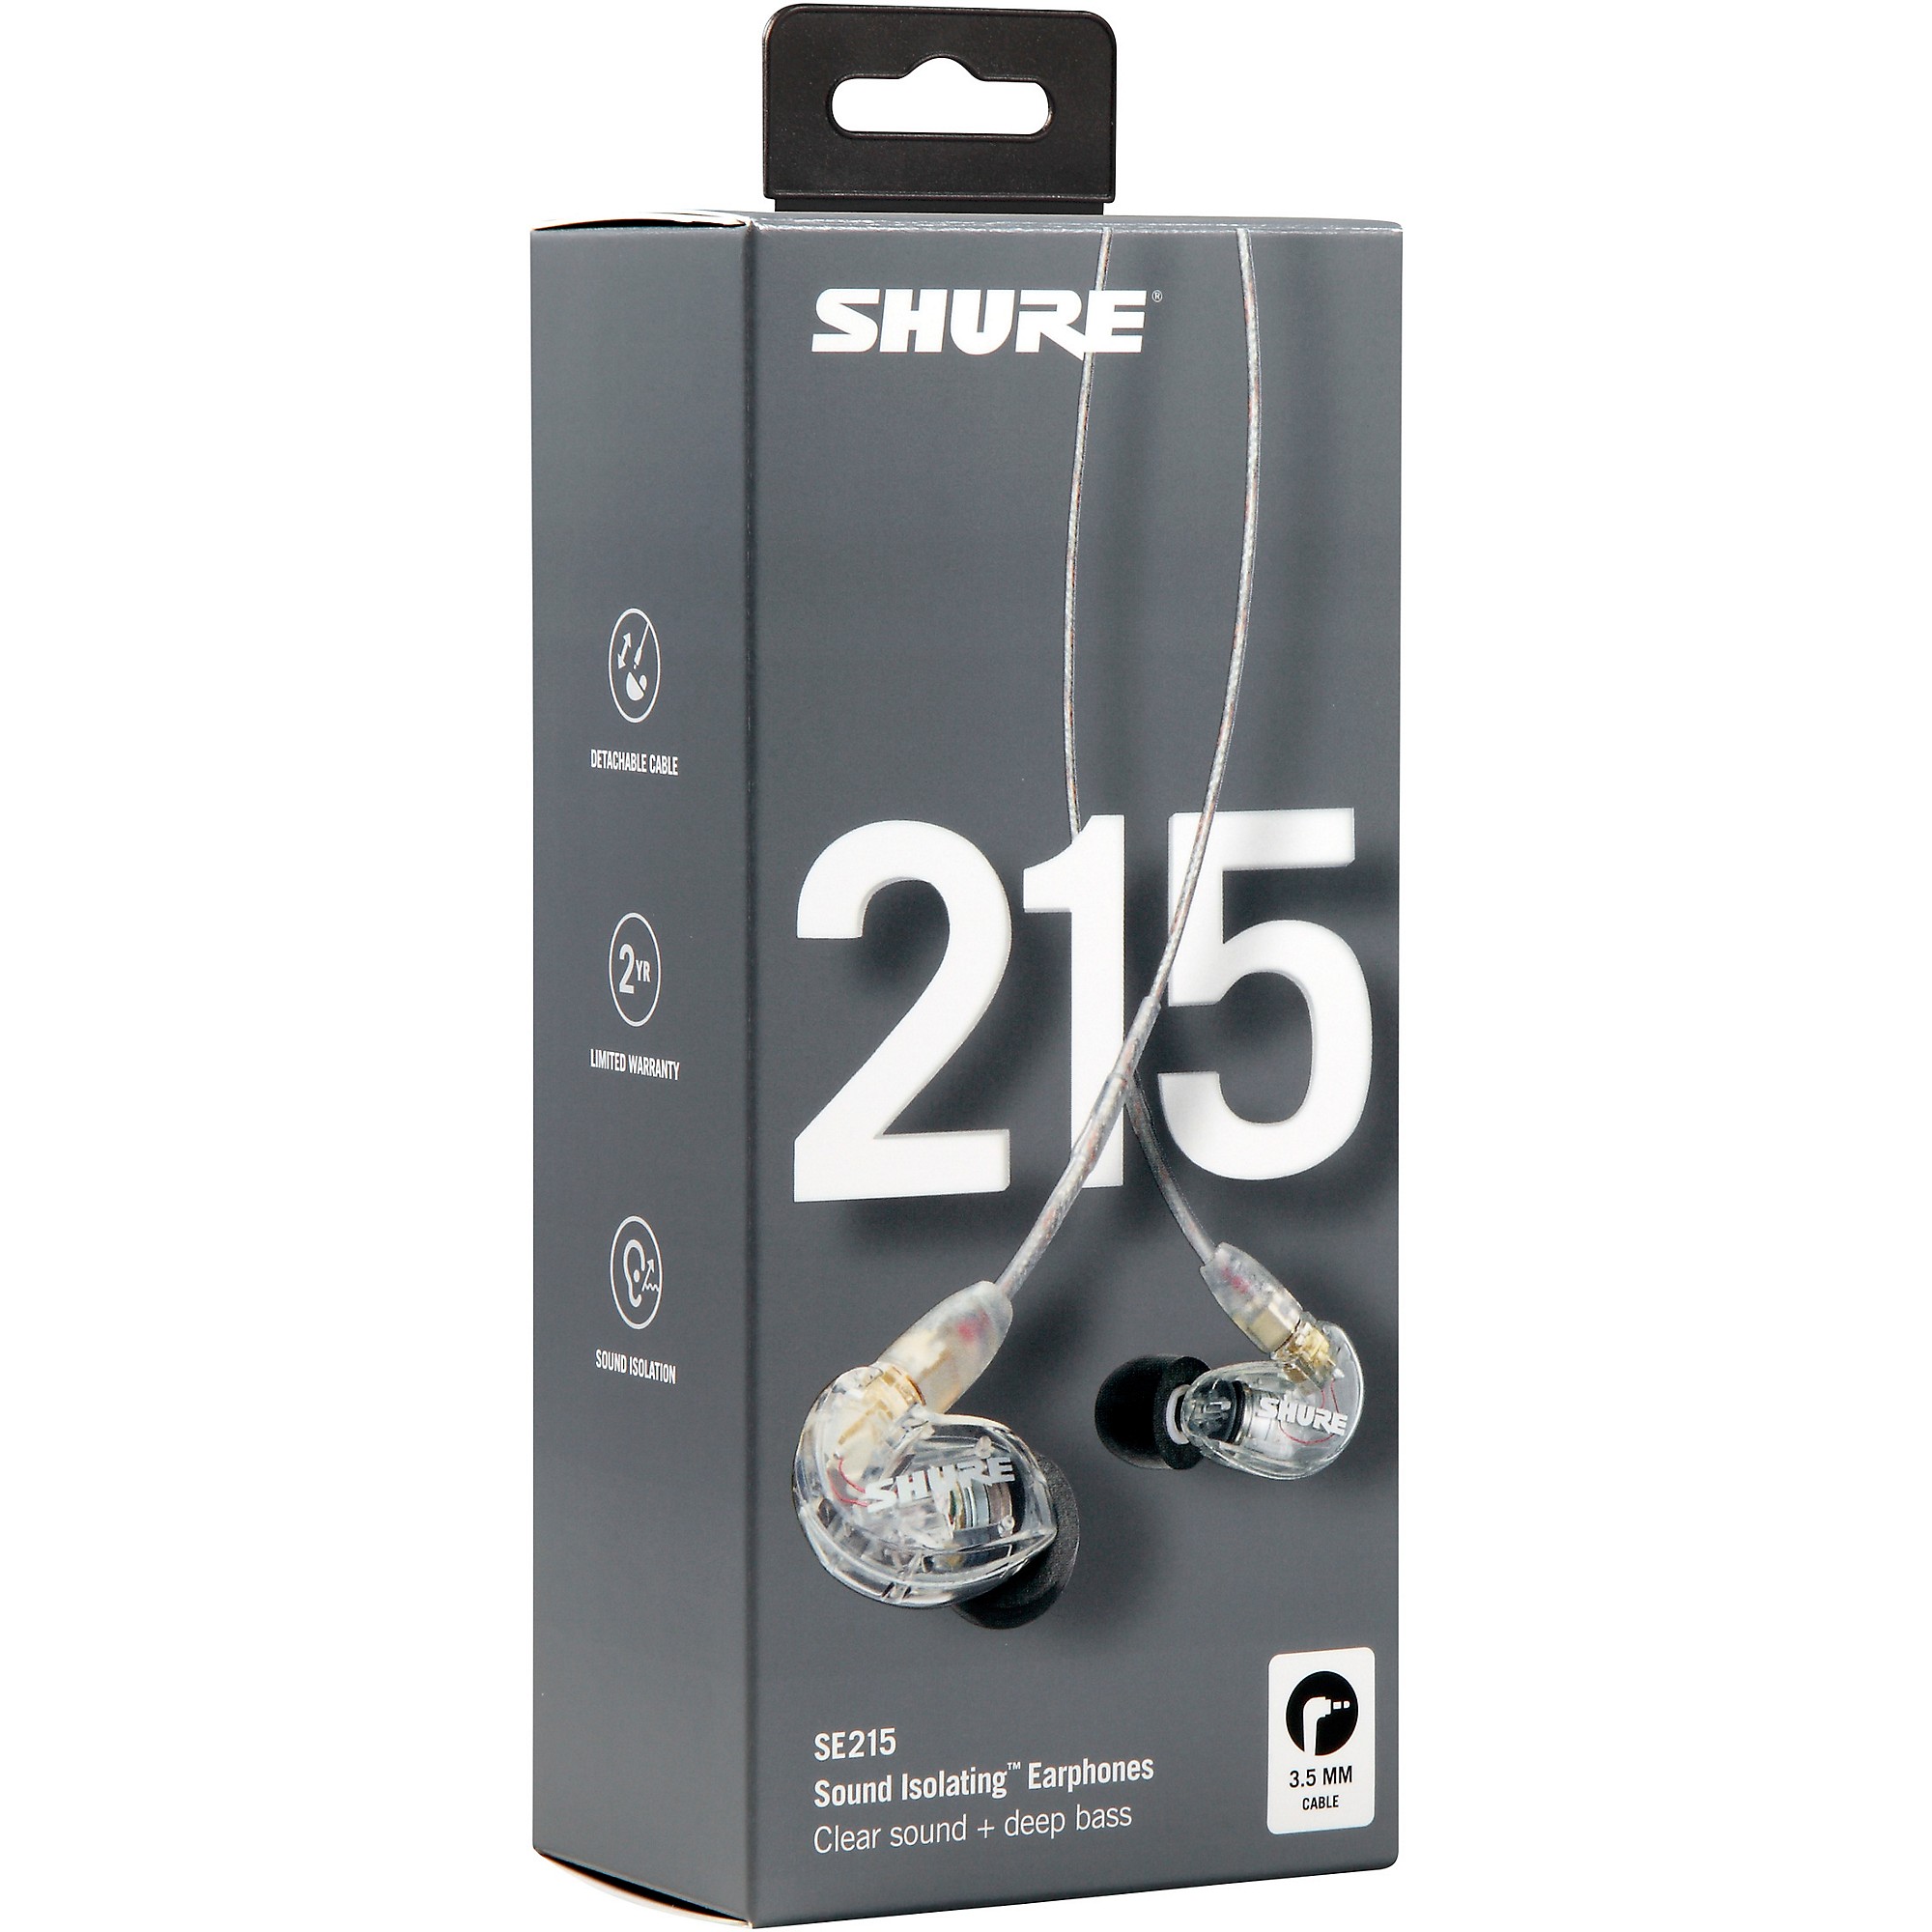 Shure SE215 review - SoundGuys